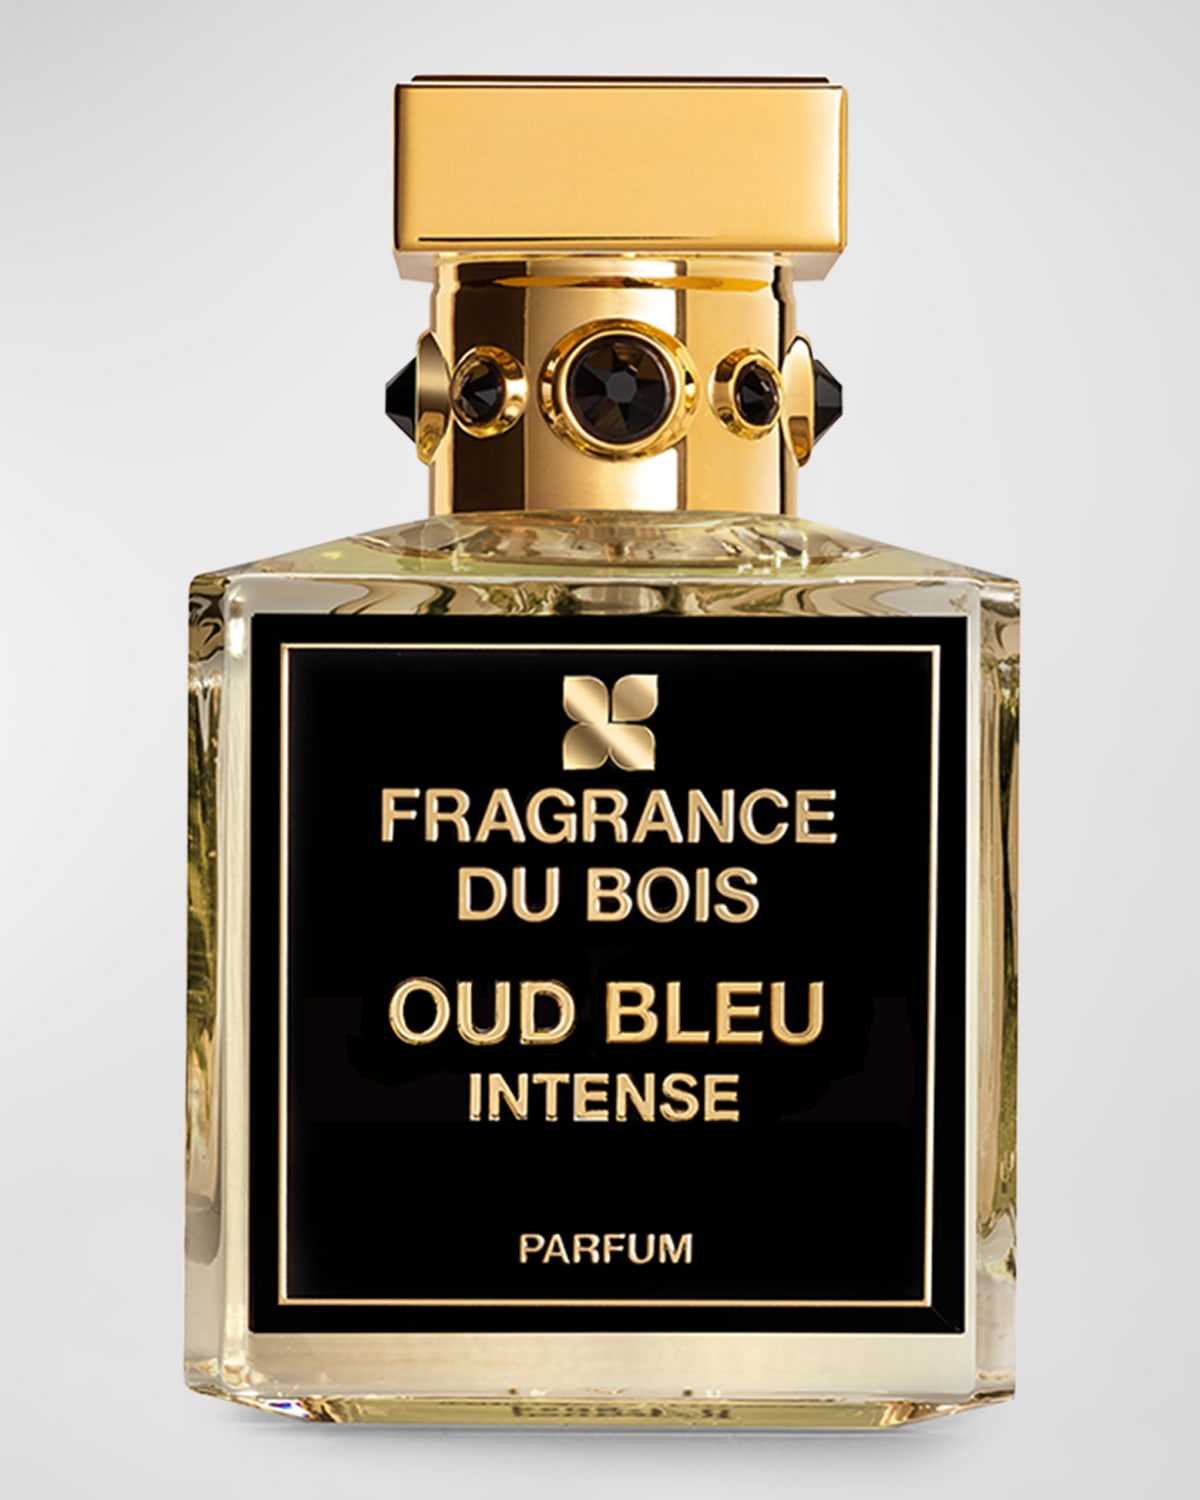 Fragrance Du Bois Oud Bleu Intense Parfum, 3.4 Oz.